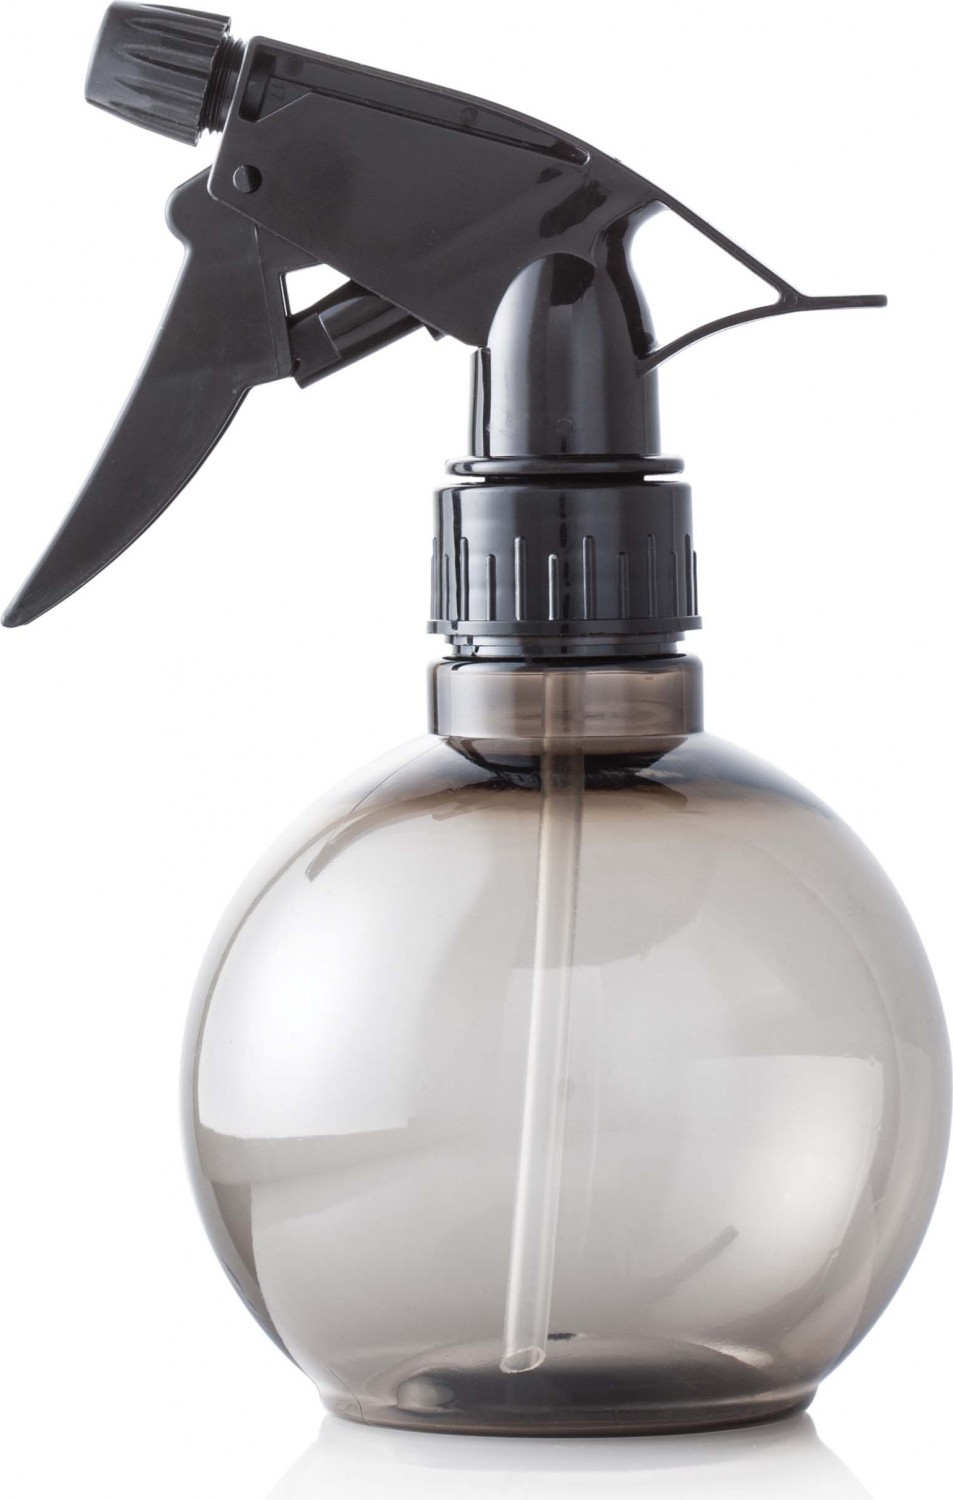  XanitaliaPro Bowl Spray Bottle in Gray 